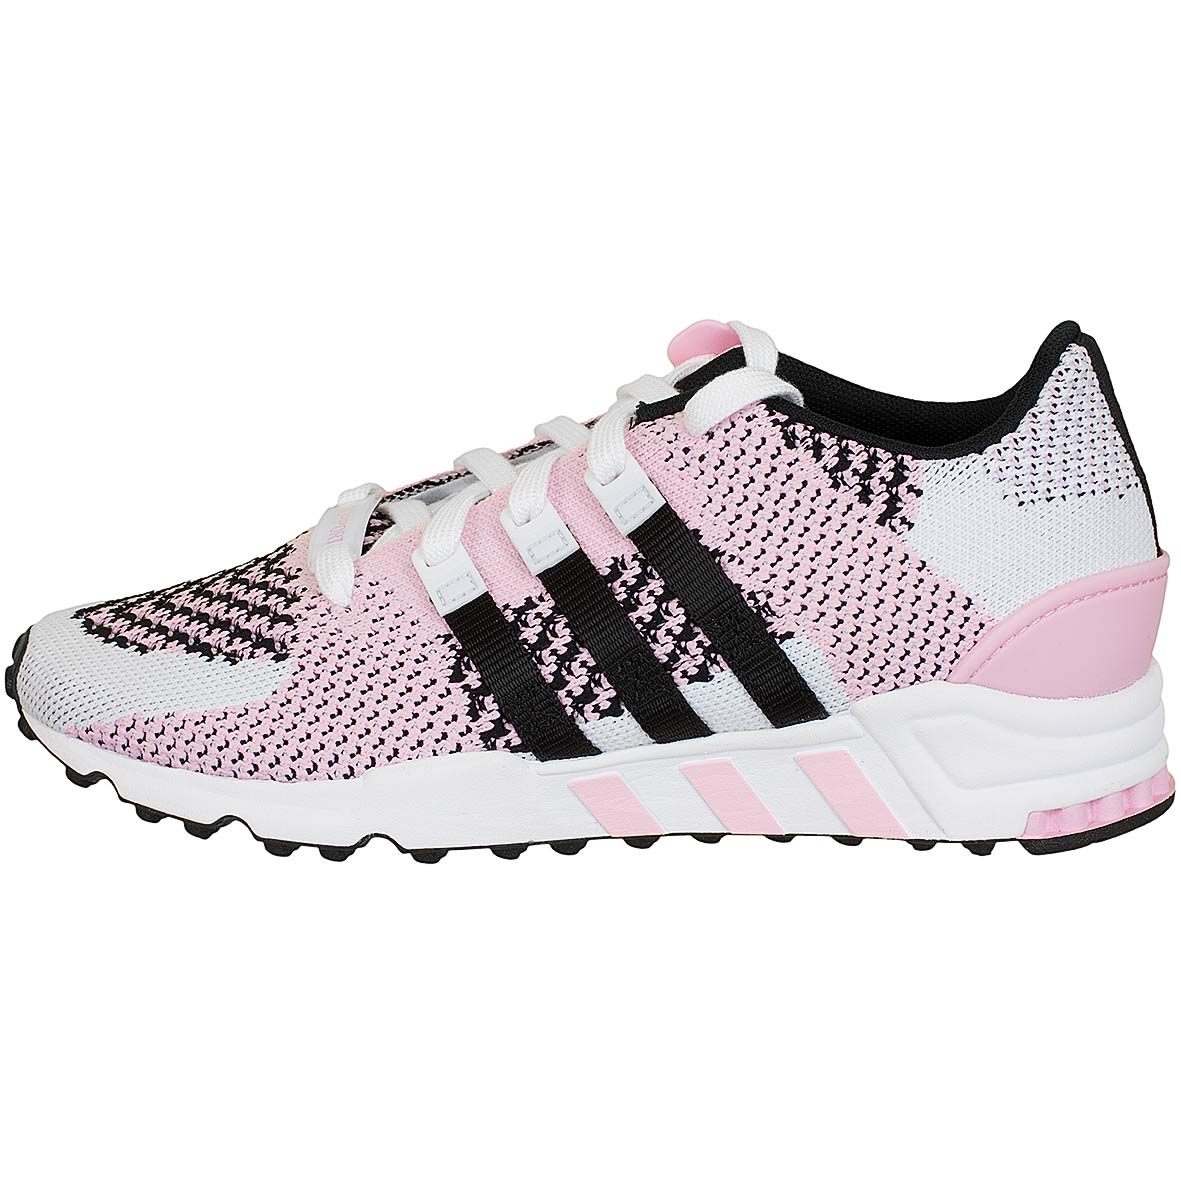 ☆ Adidas Originals Damen Sneaker Equipment Support RF Primeknit pink/schwarz  - hier bestellen!